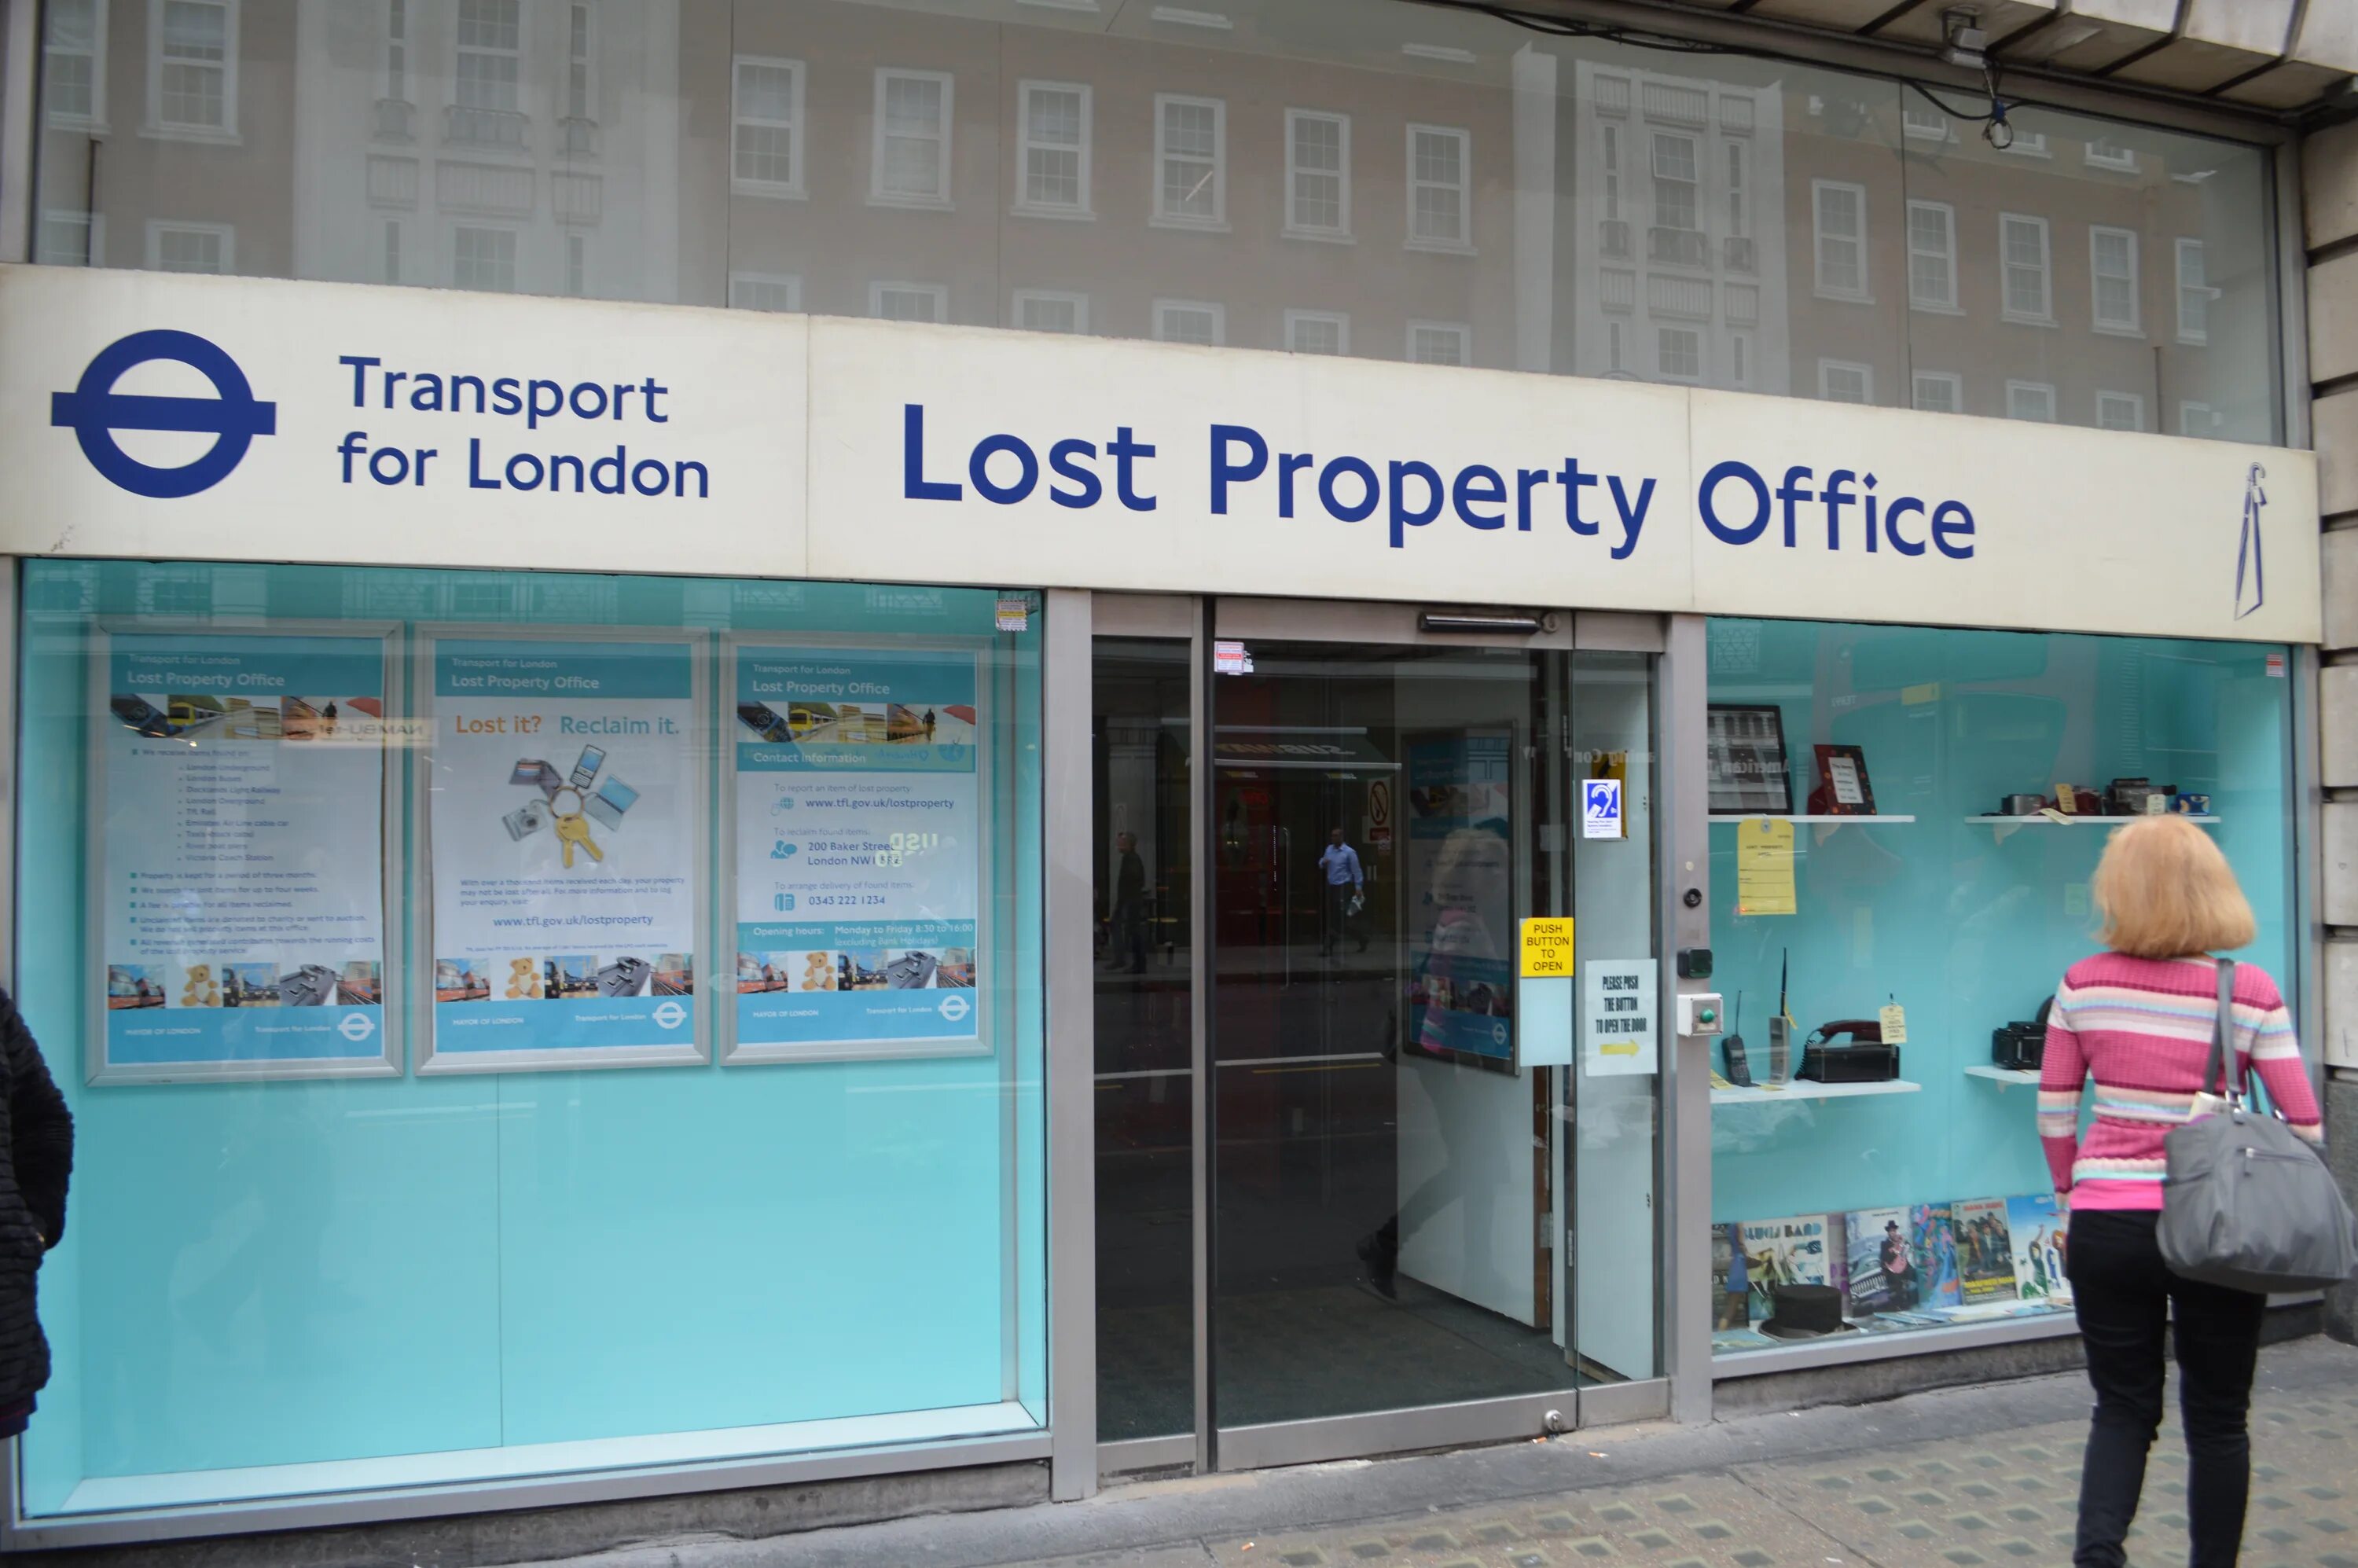 Бюро находок москва автобус телефон. Lost property Office. Картинка Lost property. Lost property на вокзале. In the Lost property Office.